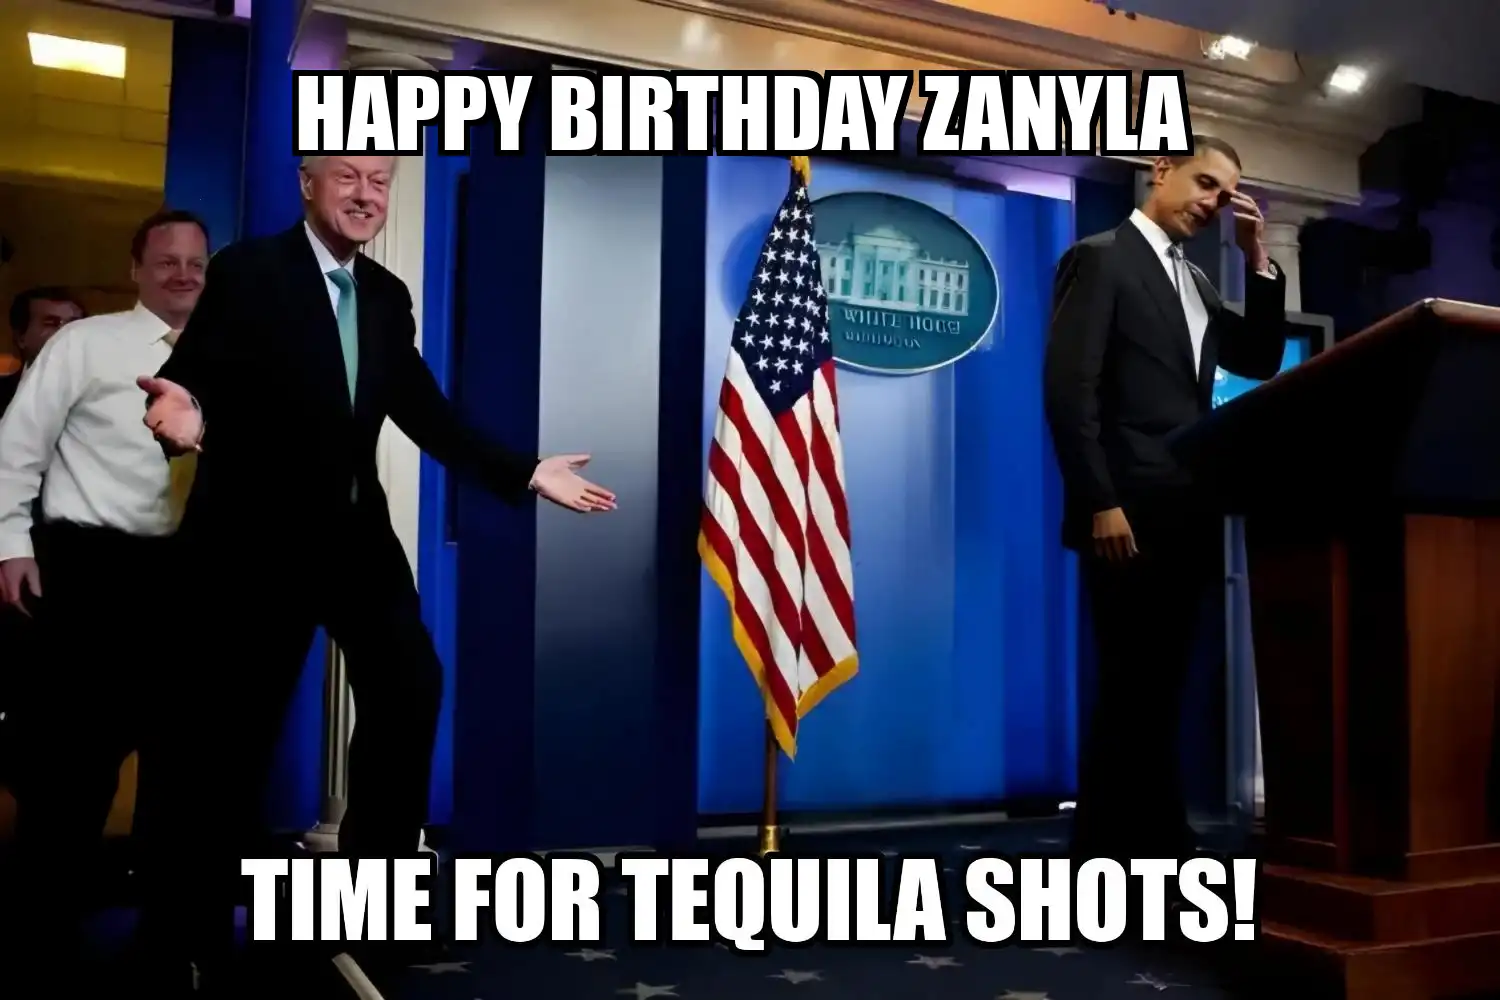 Happy Birthday Zanyla Time For Tequila Shots Memes